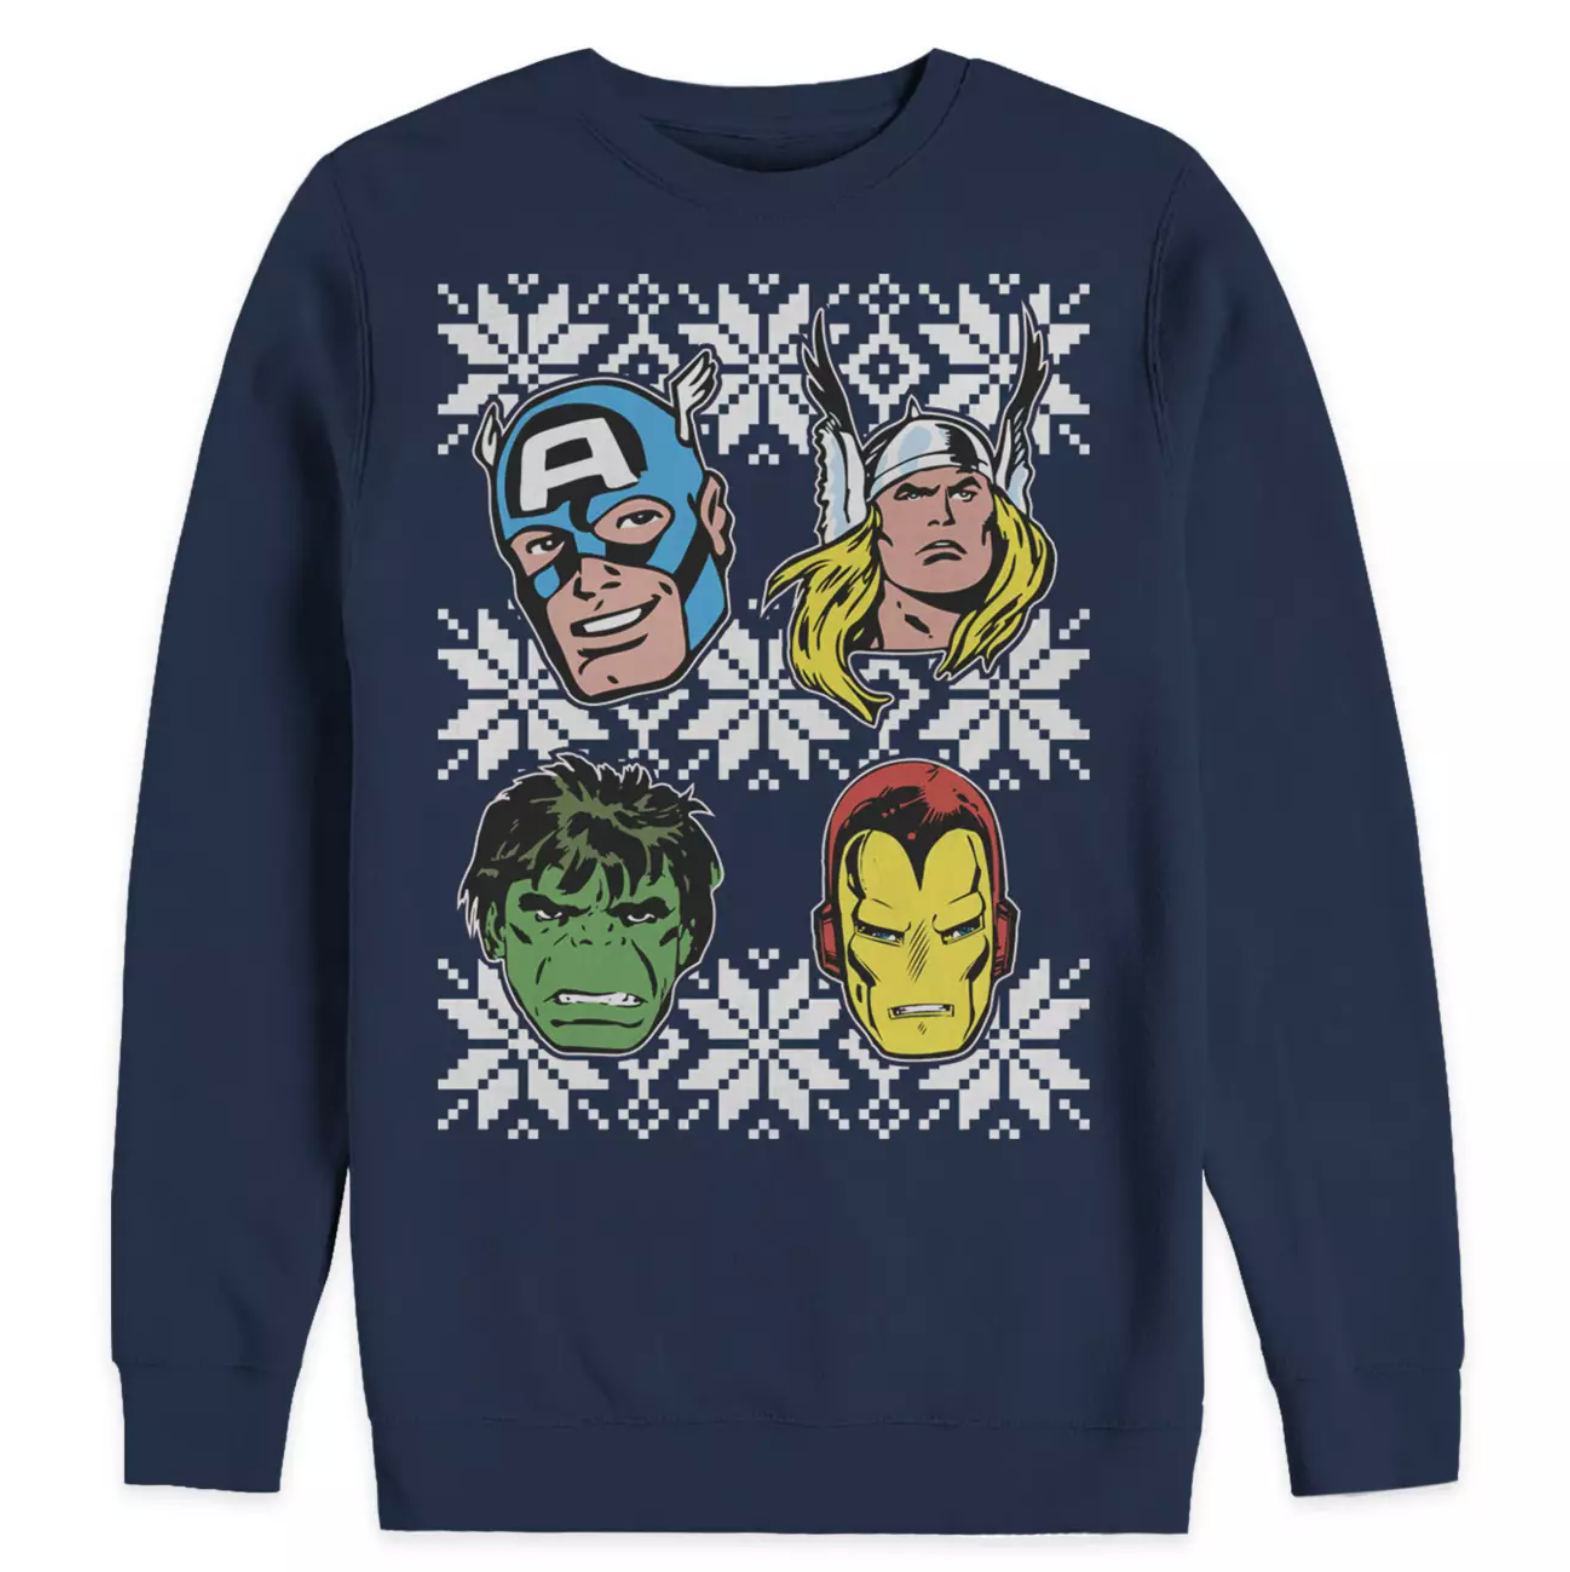 Avengers sweater